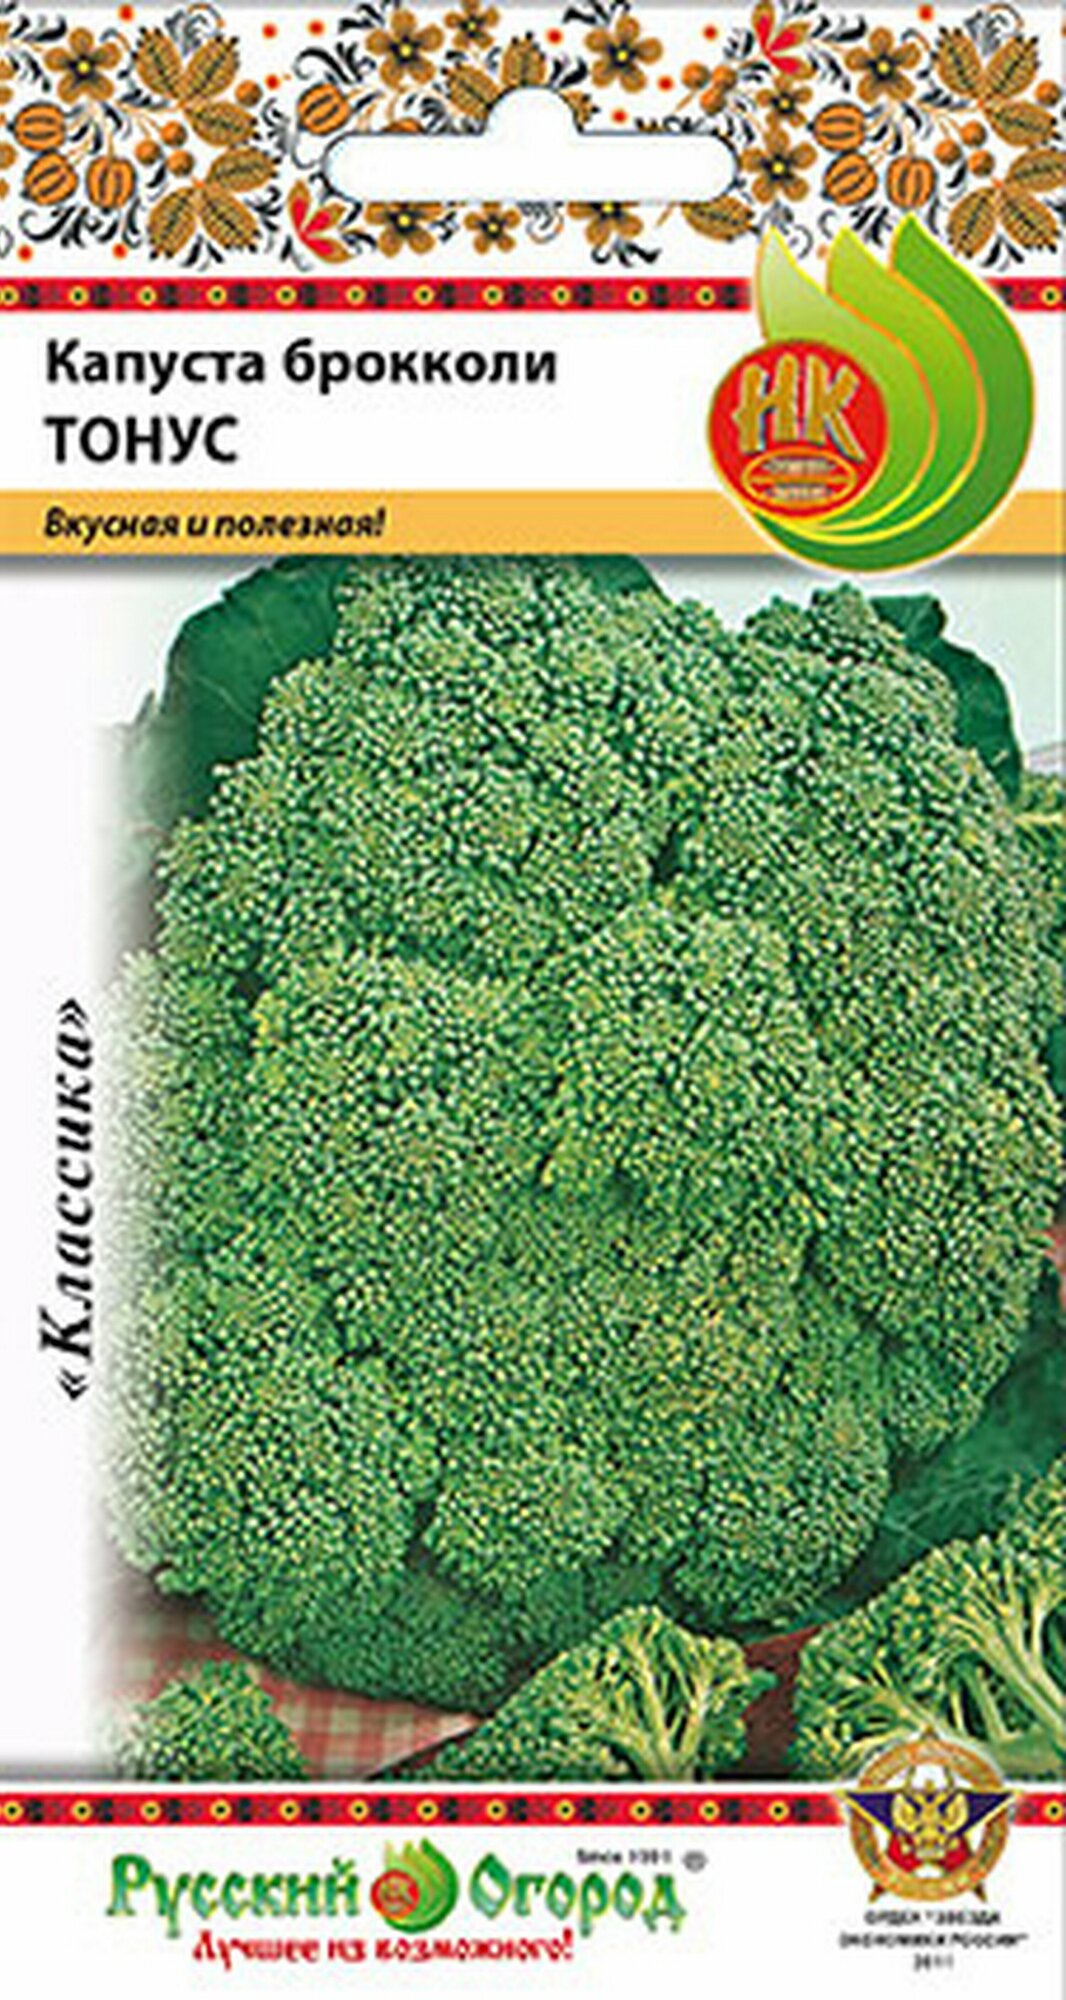 Семена Капуста брокколи Тонус 0.5 грамма семян Русский Огород